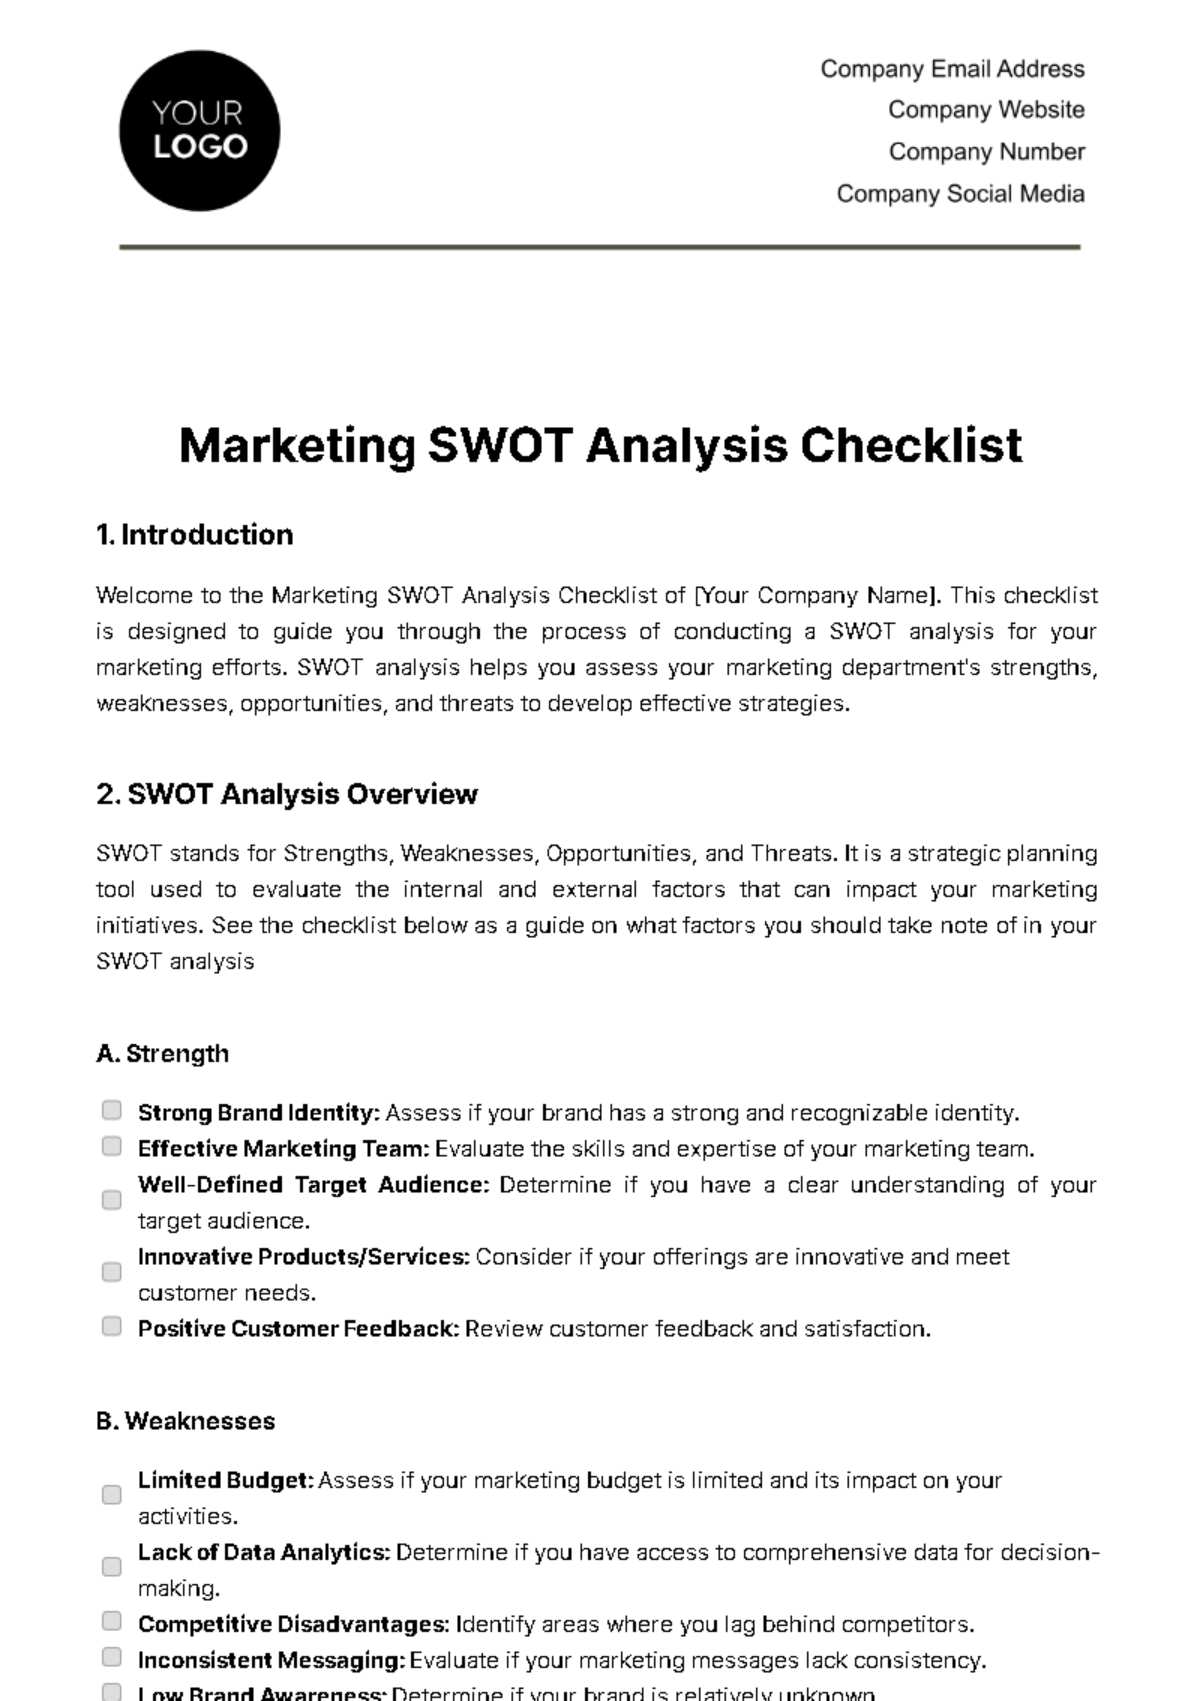 Marketing SWOT Analysis Checklist Template